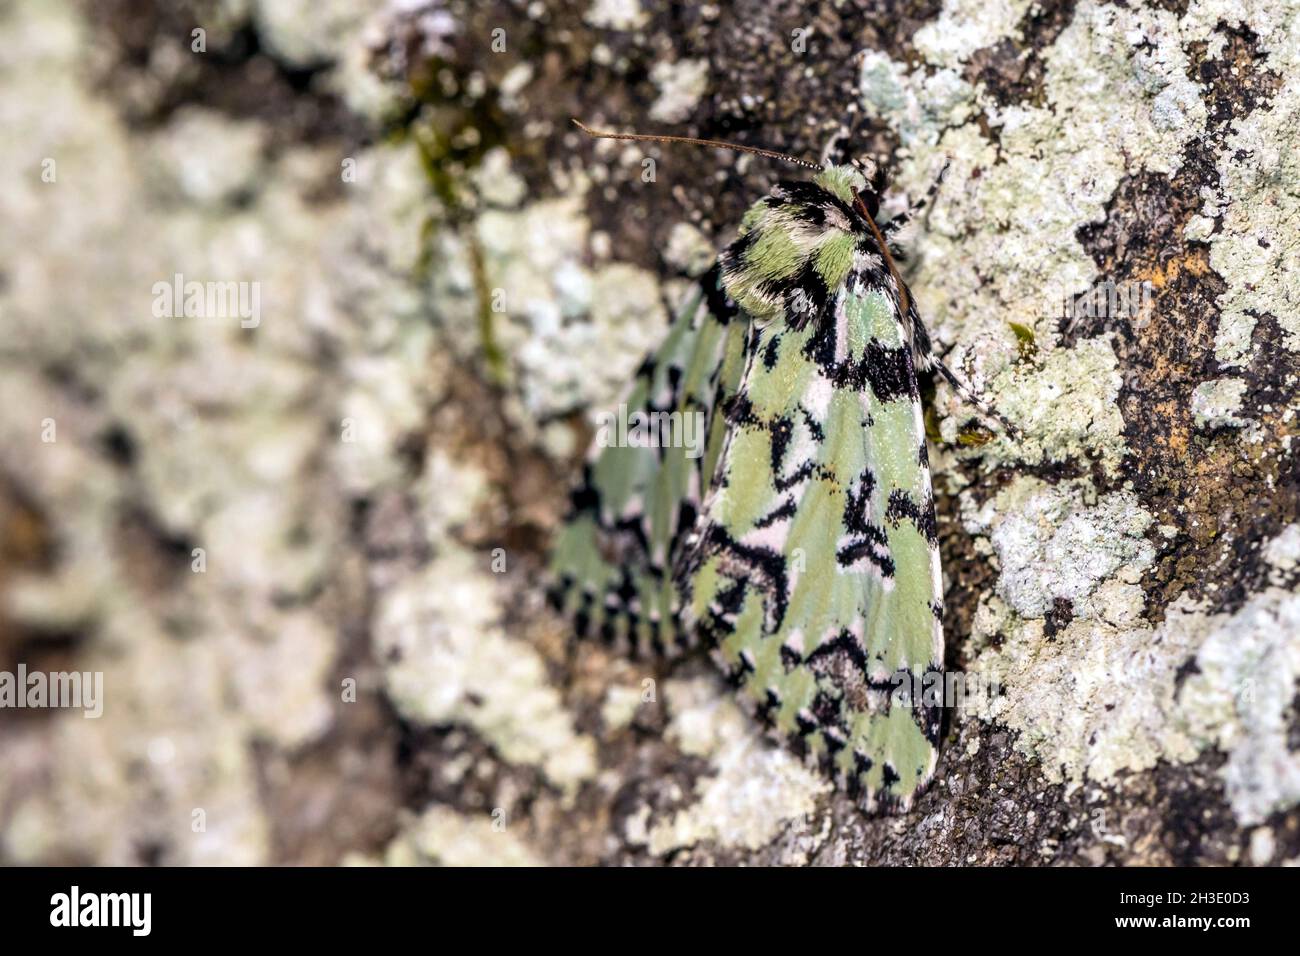 Scarce Merveille du jour (Moma alpium, Daseoacheta alpium, Diphthera alpium), resting at a lichened rock, Germany Stock Photo